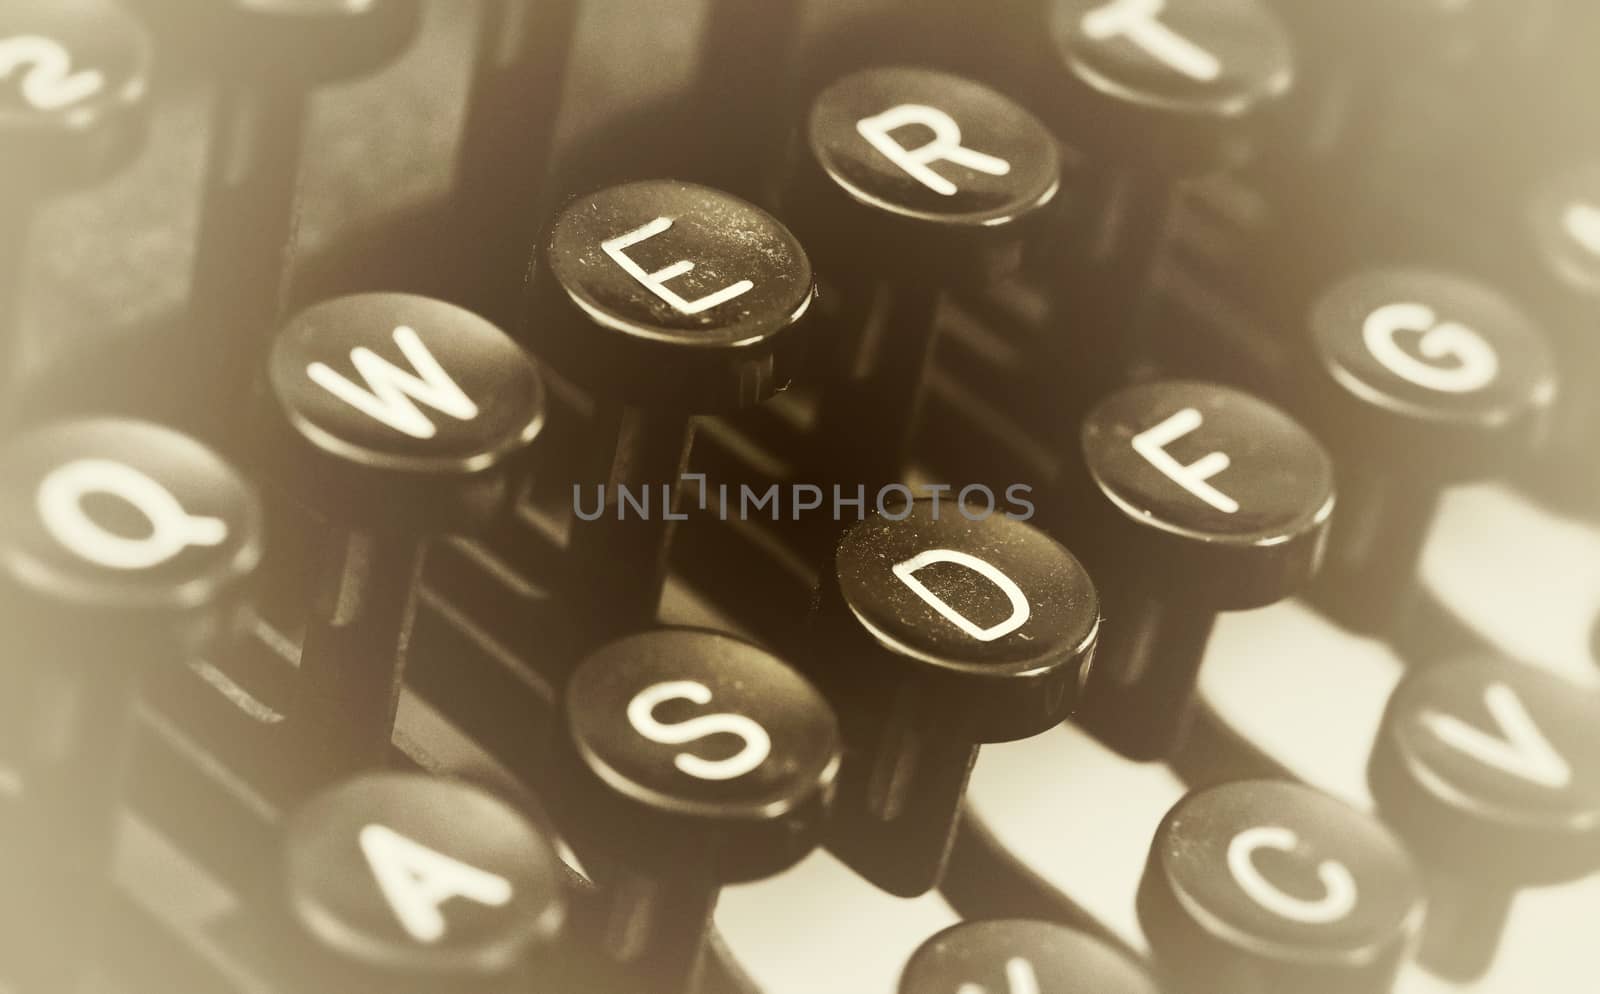 Close up photo of antique typewriter keys, shallow focus